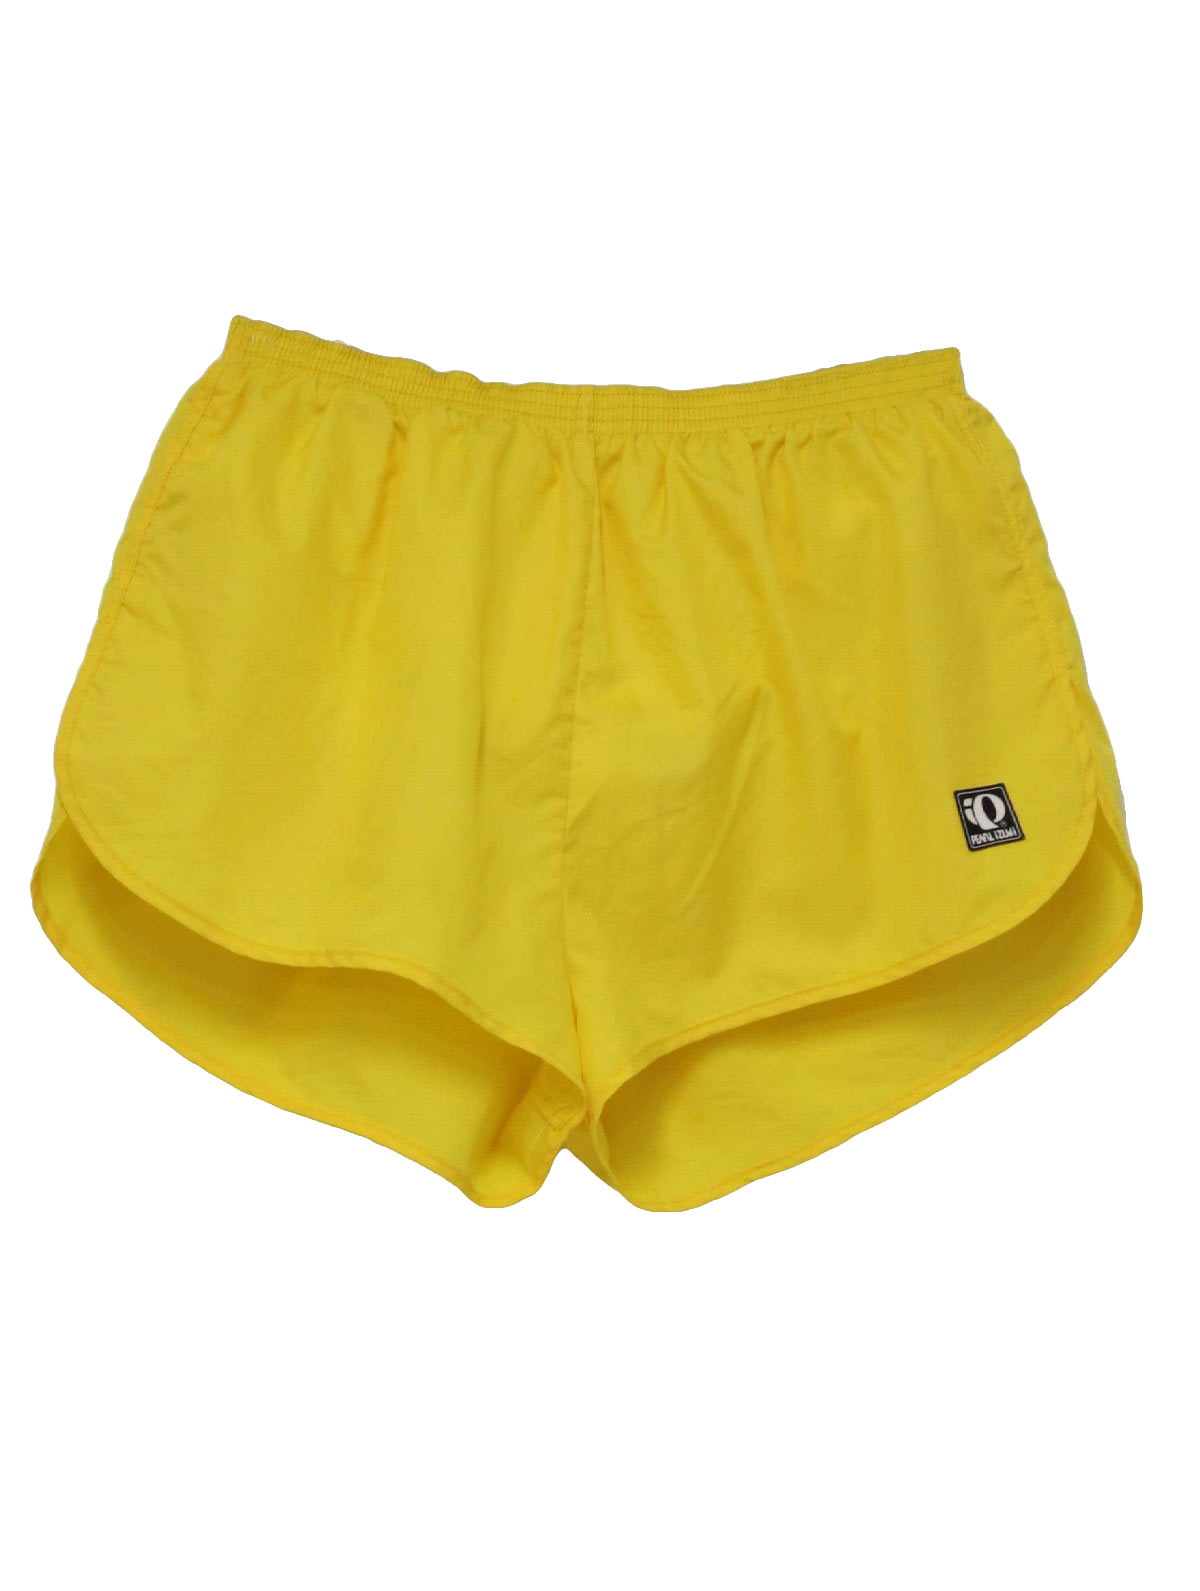 1980s Pearlizumi Shorts: 80s -Pearlizumi- Unisex yellow nylon blend ...